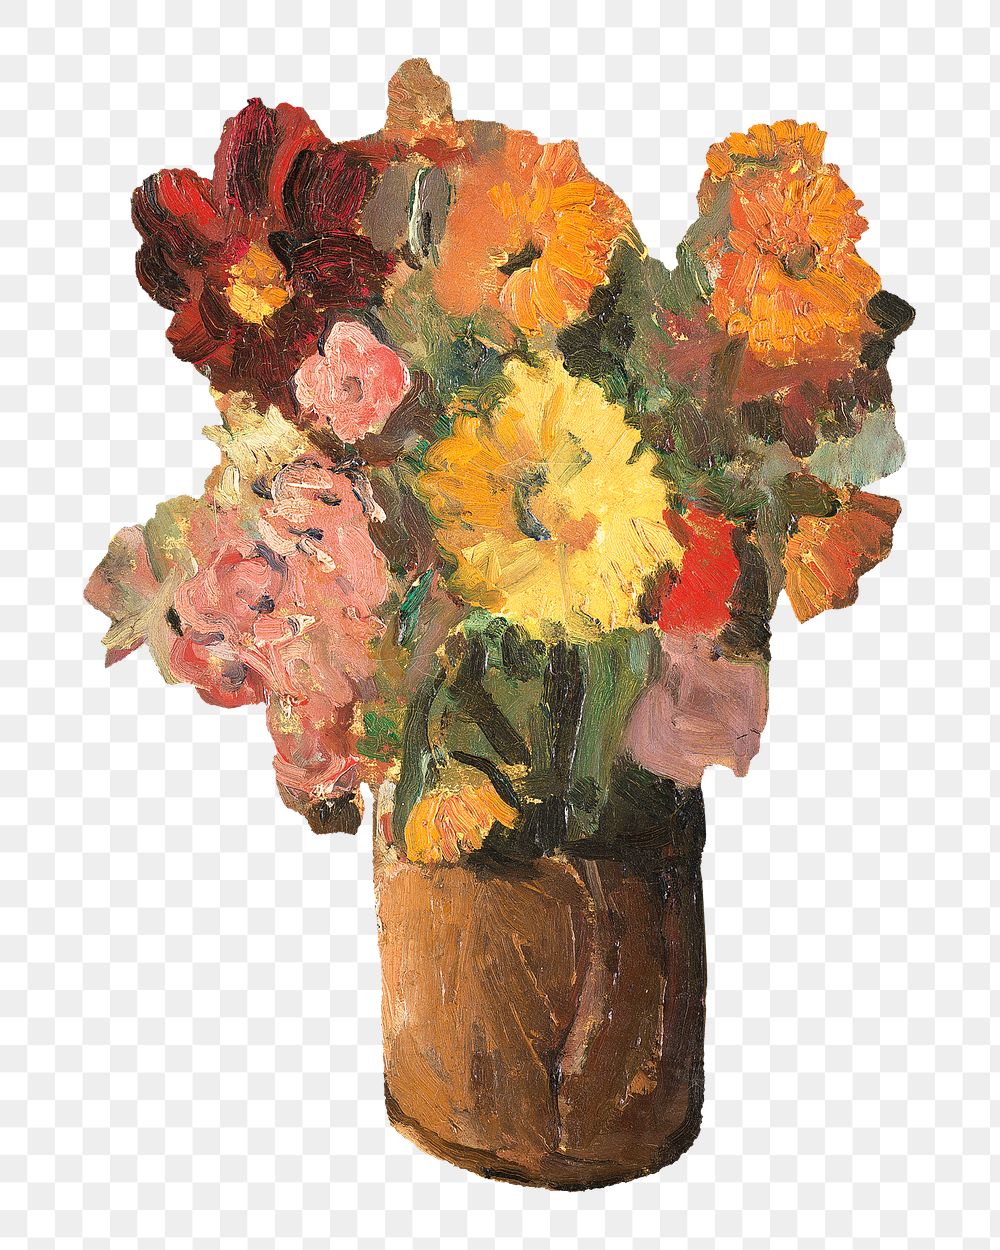 PNG Flower vase still life, vintage illustration by Roger Fry, transparent background. Remixed by rawpixel.